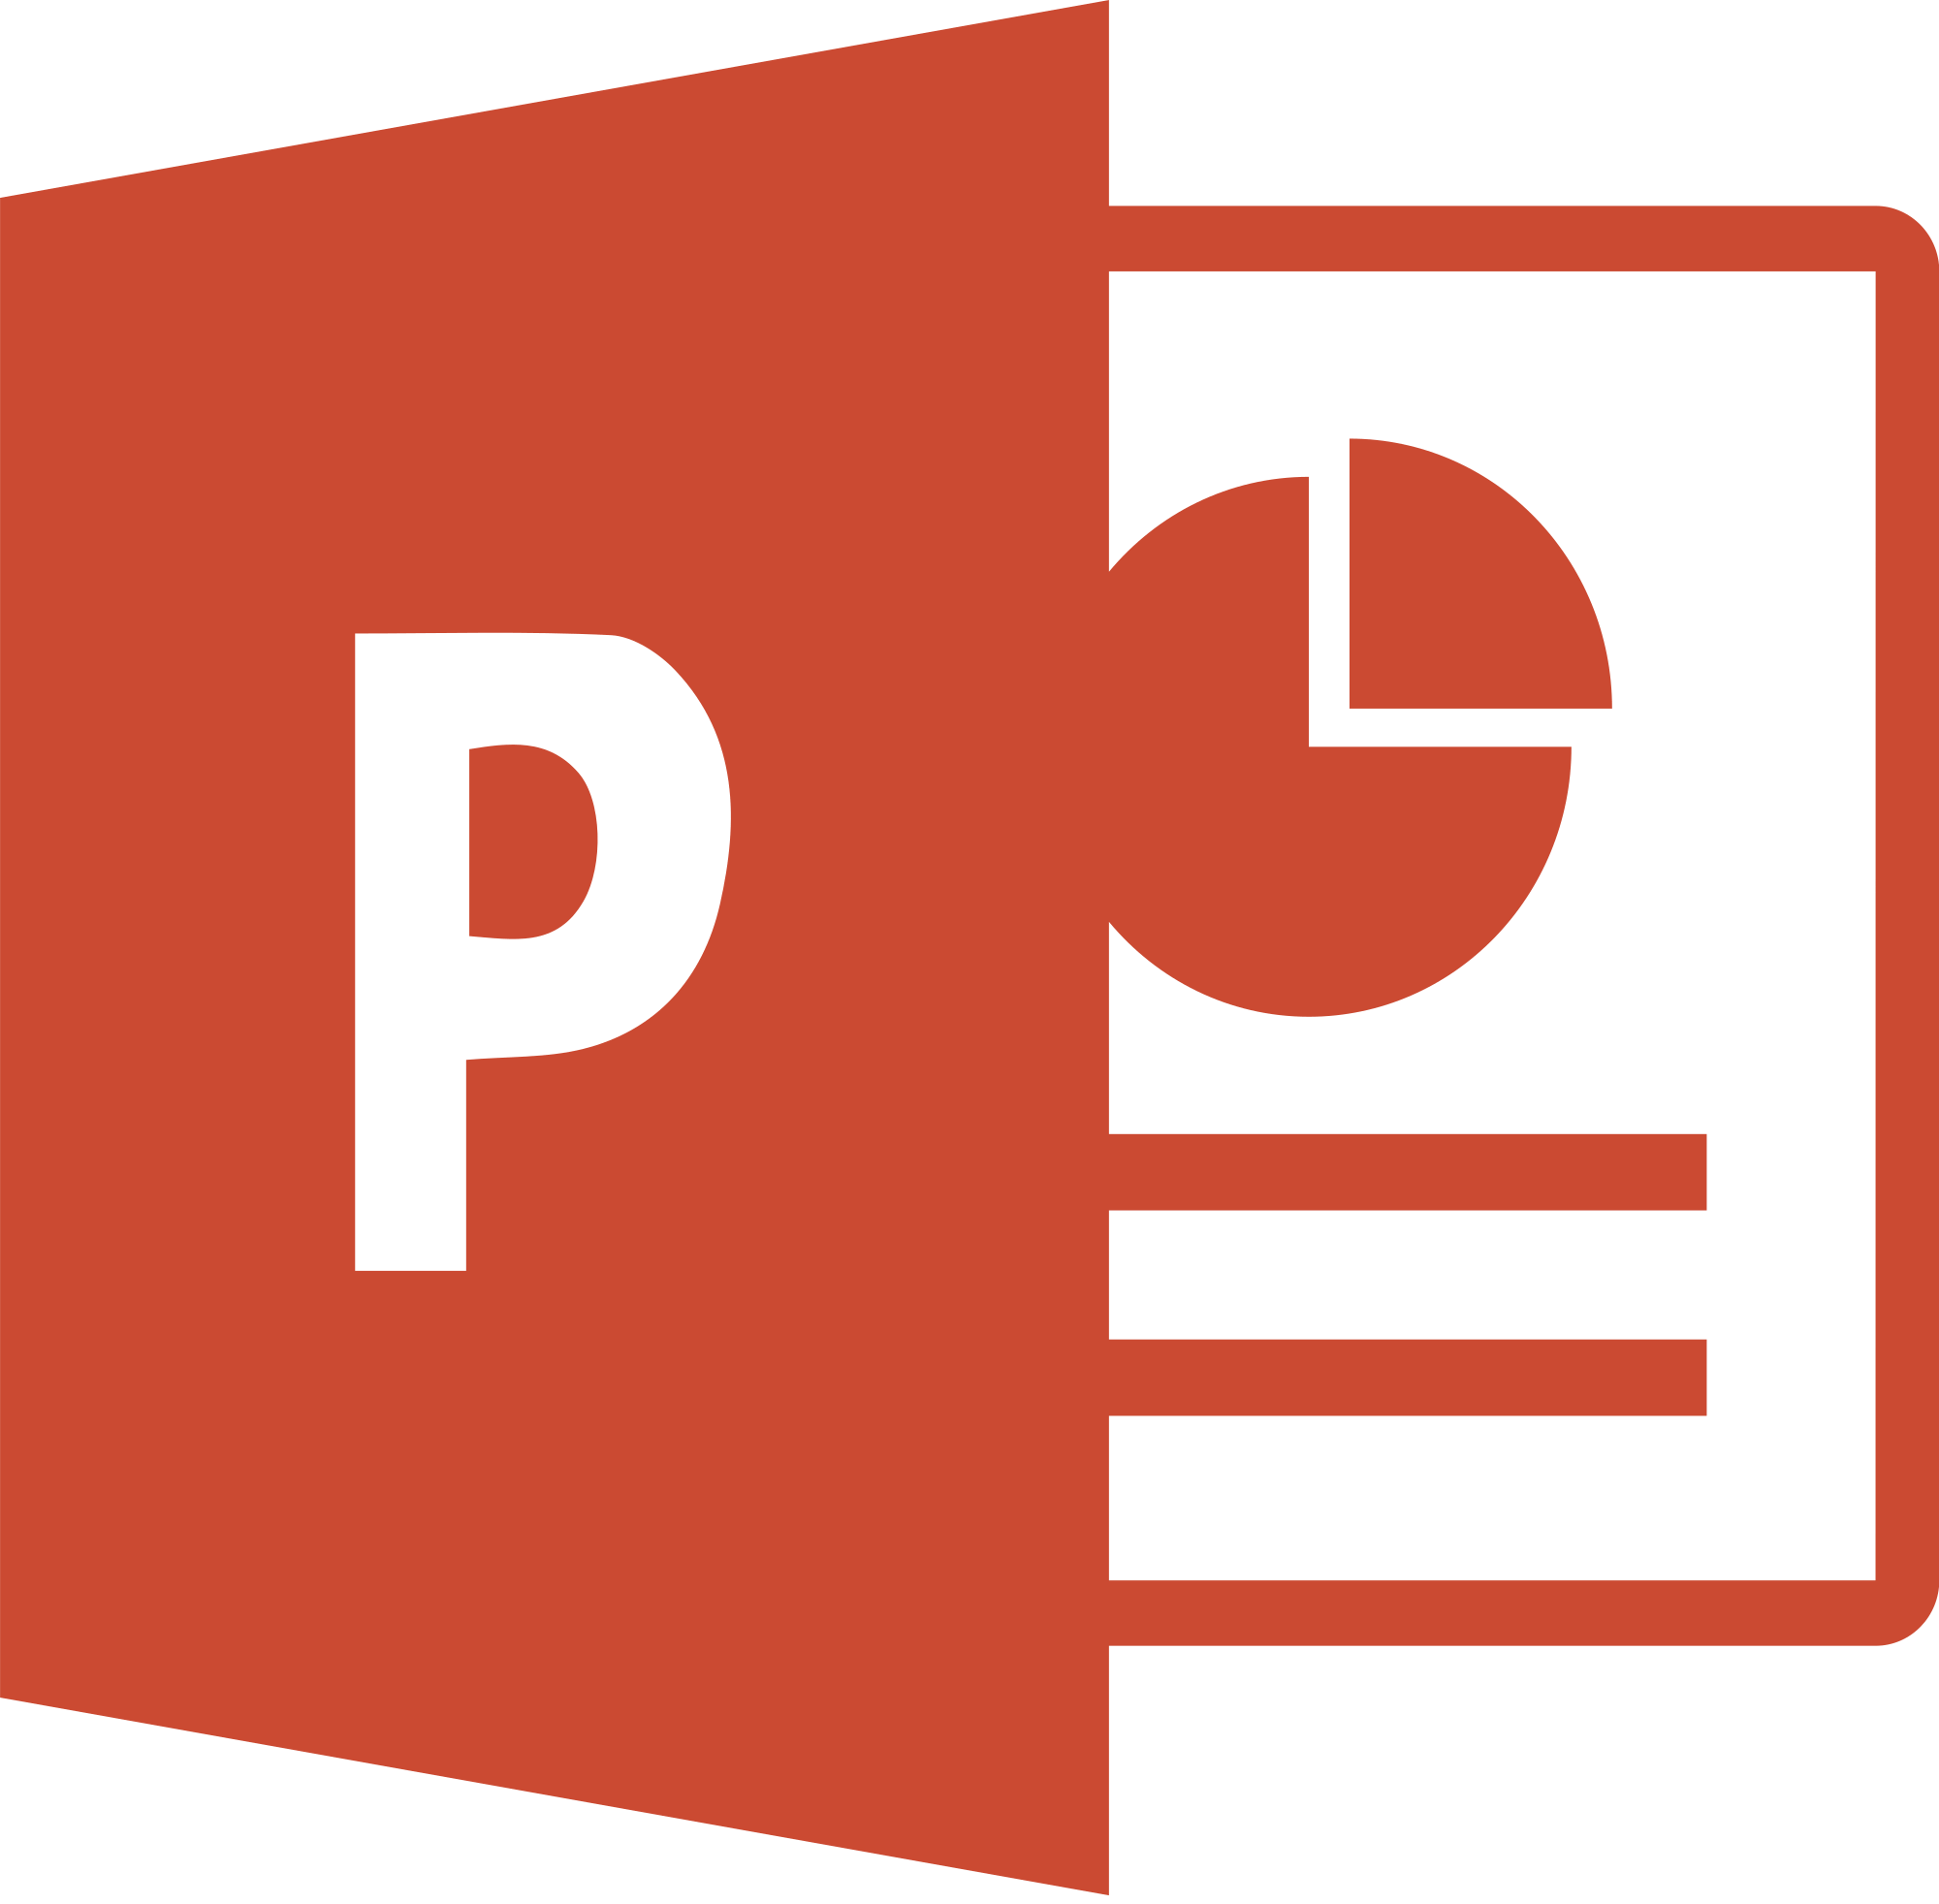 Microsoft PPT Logo - File:Microsoft PowerPoint 2013 logo.svg - Wikimedia Commons